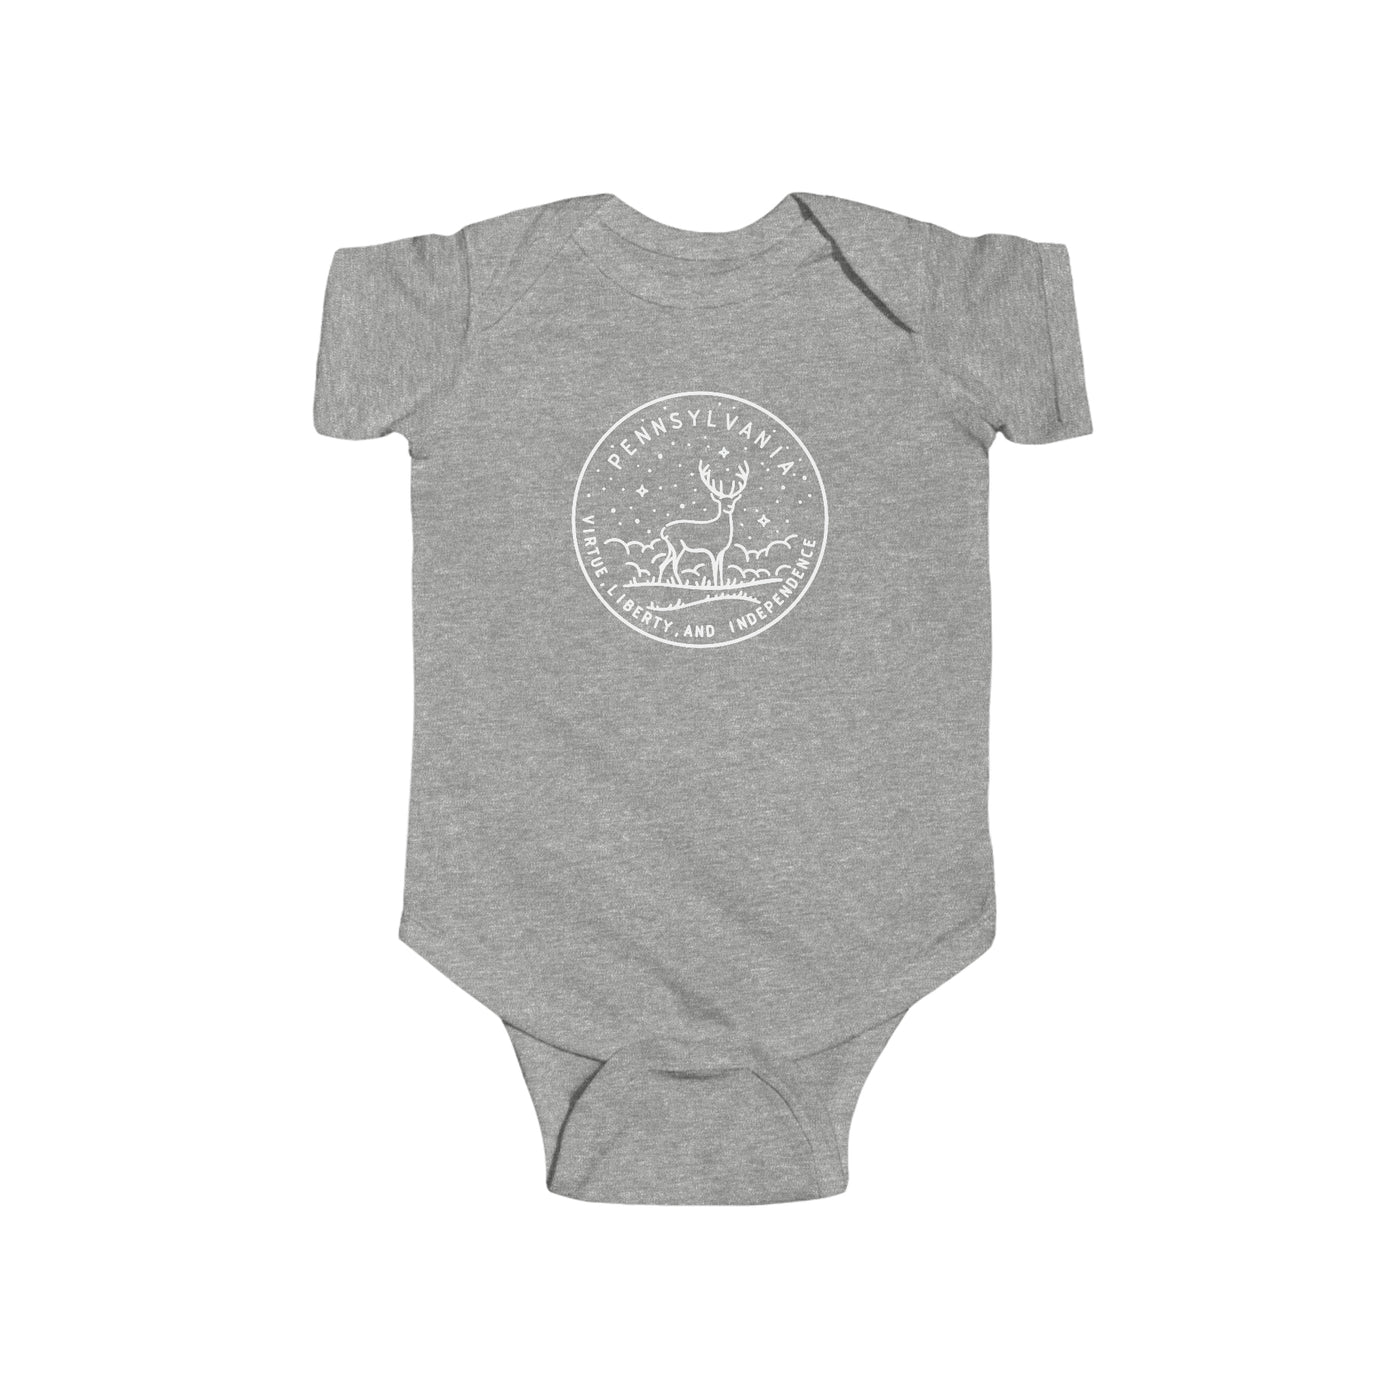 Pennsylvania State Motto Baby Bodysuit